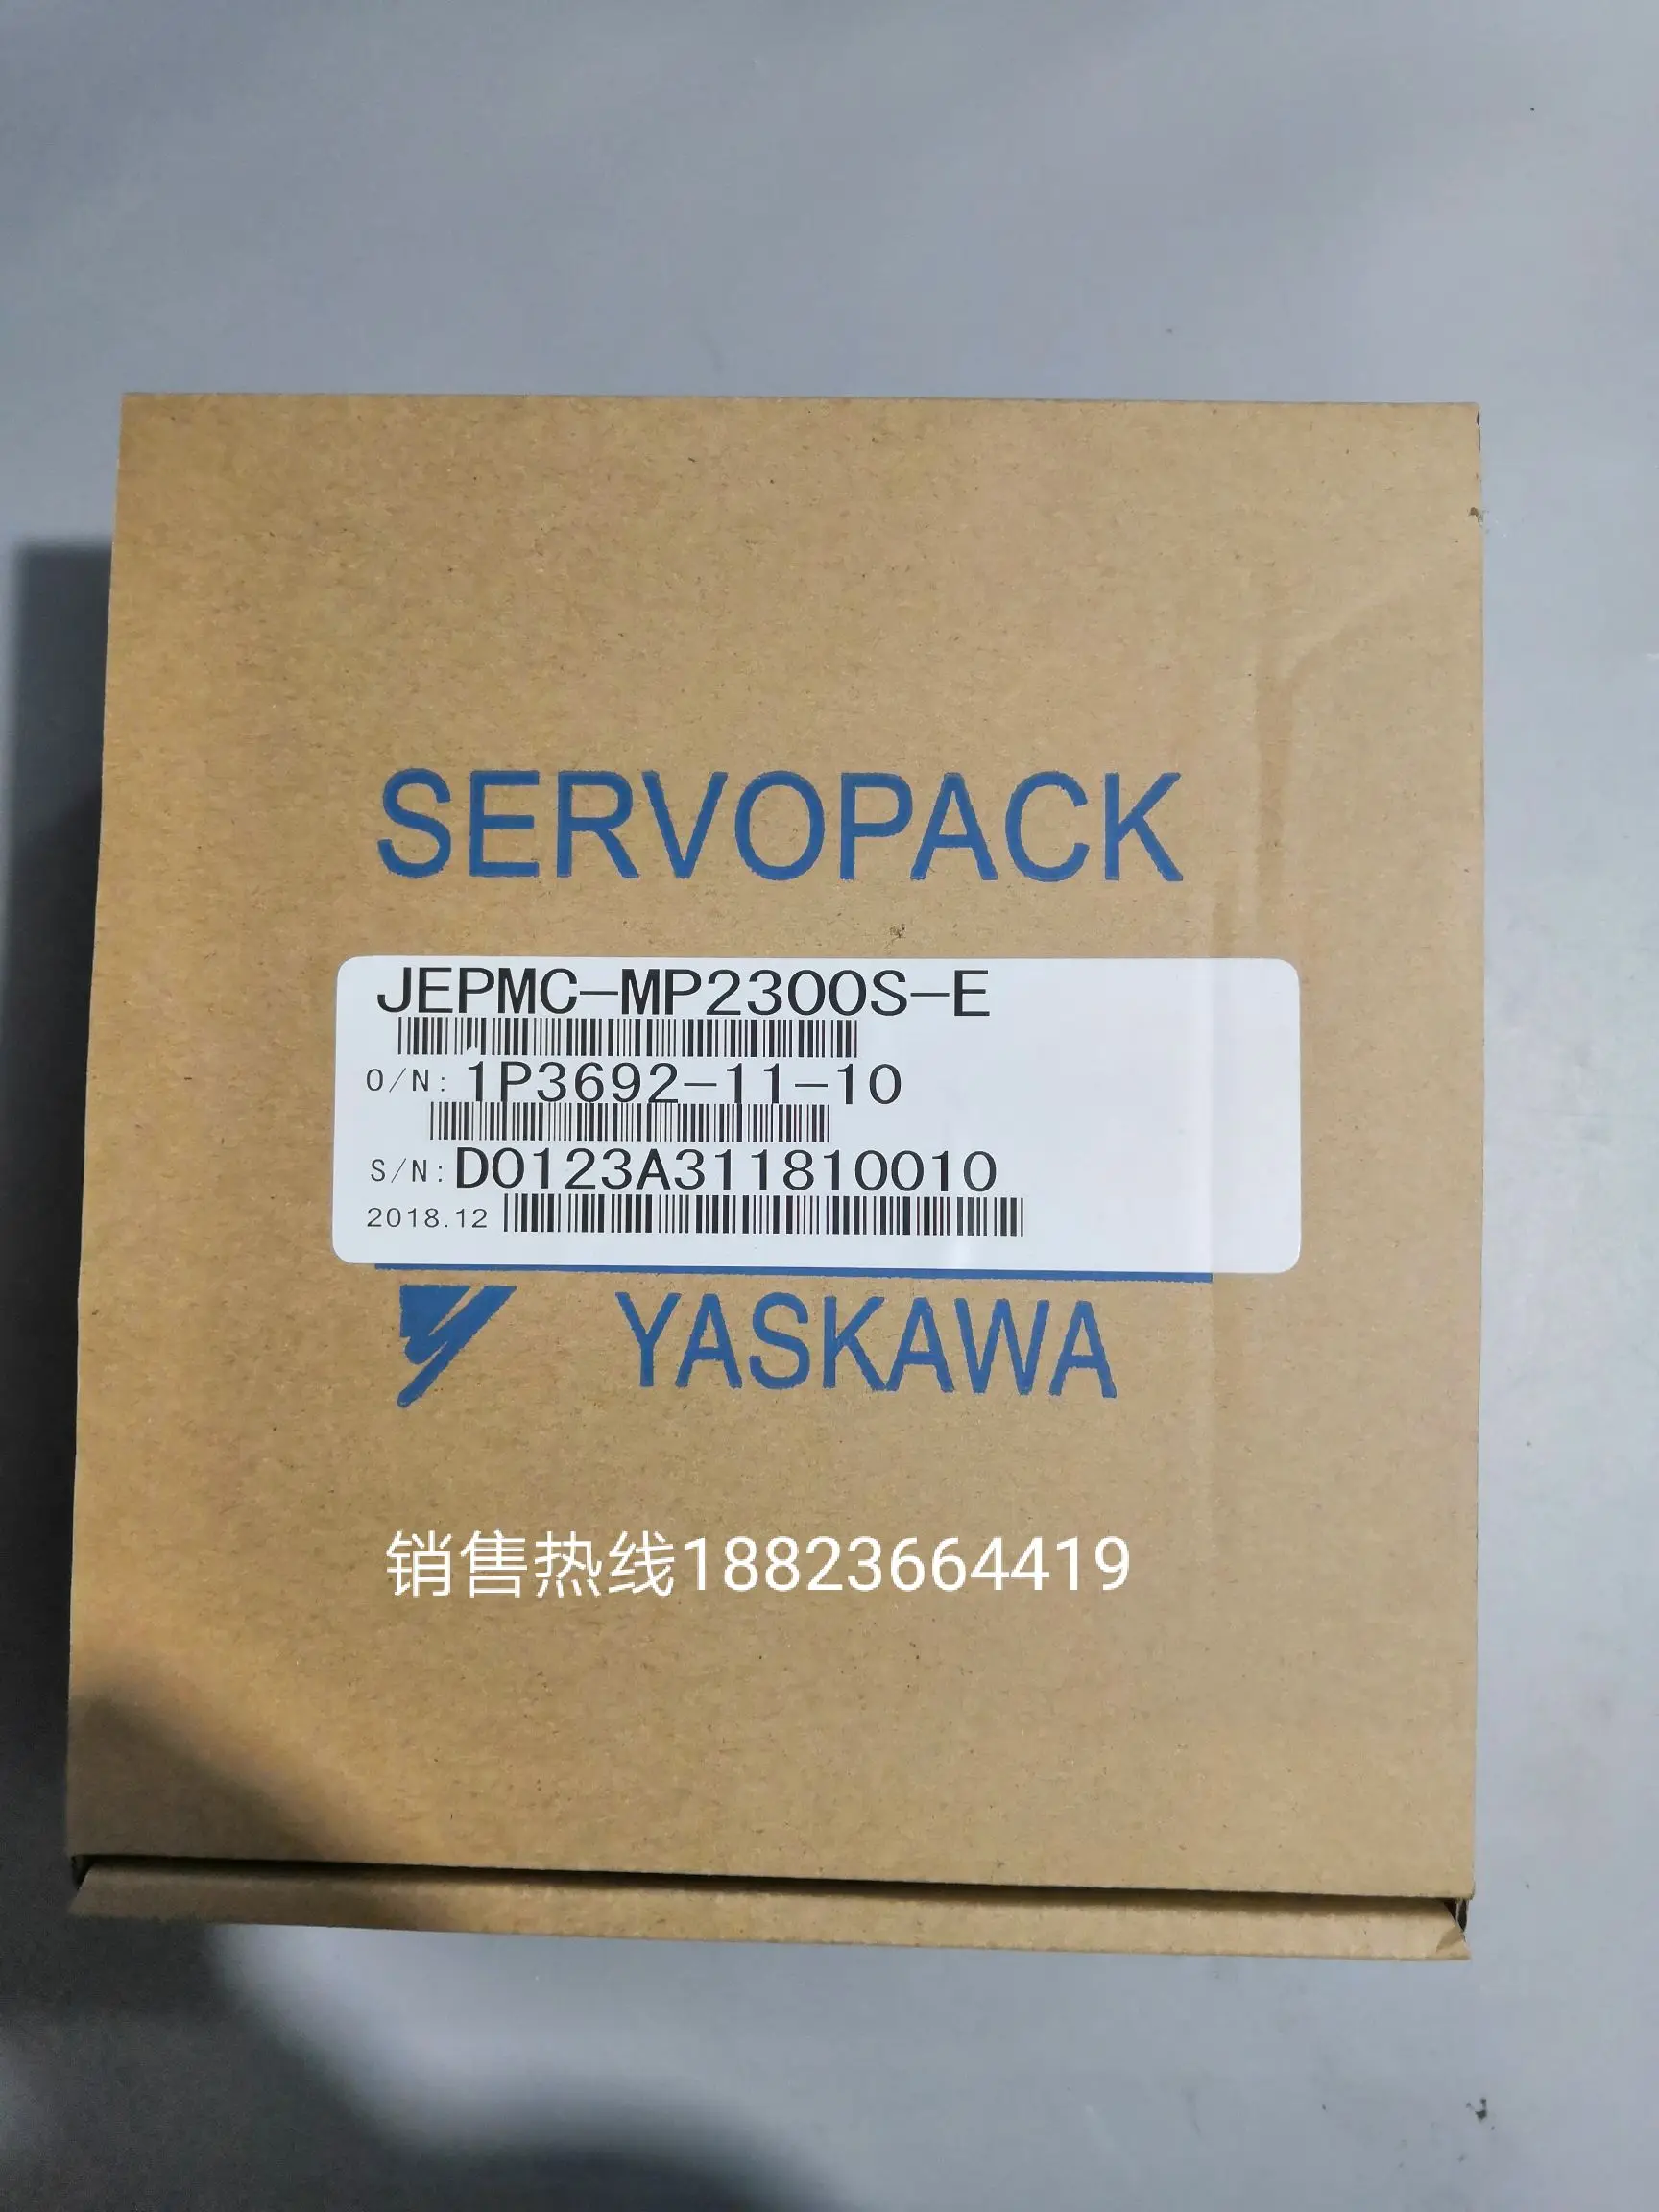 

JEPMC-MP2300S-E Yaskawa, сервоконтроллер, контроллер движения, гарантия 1 год